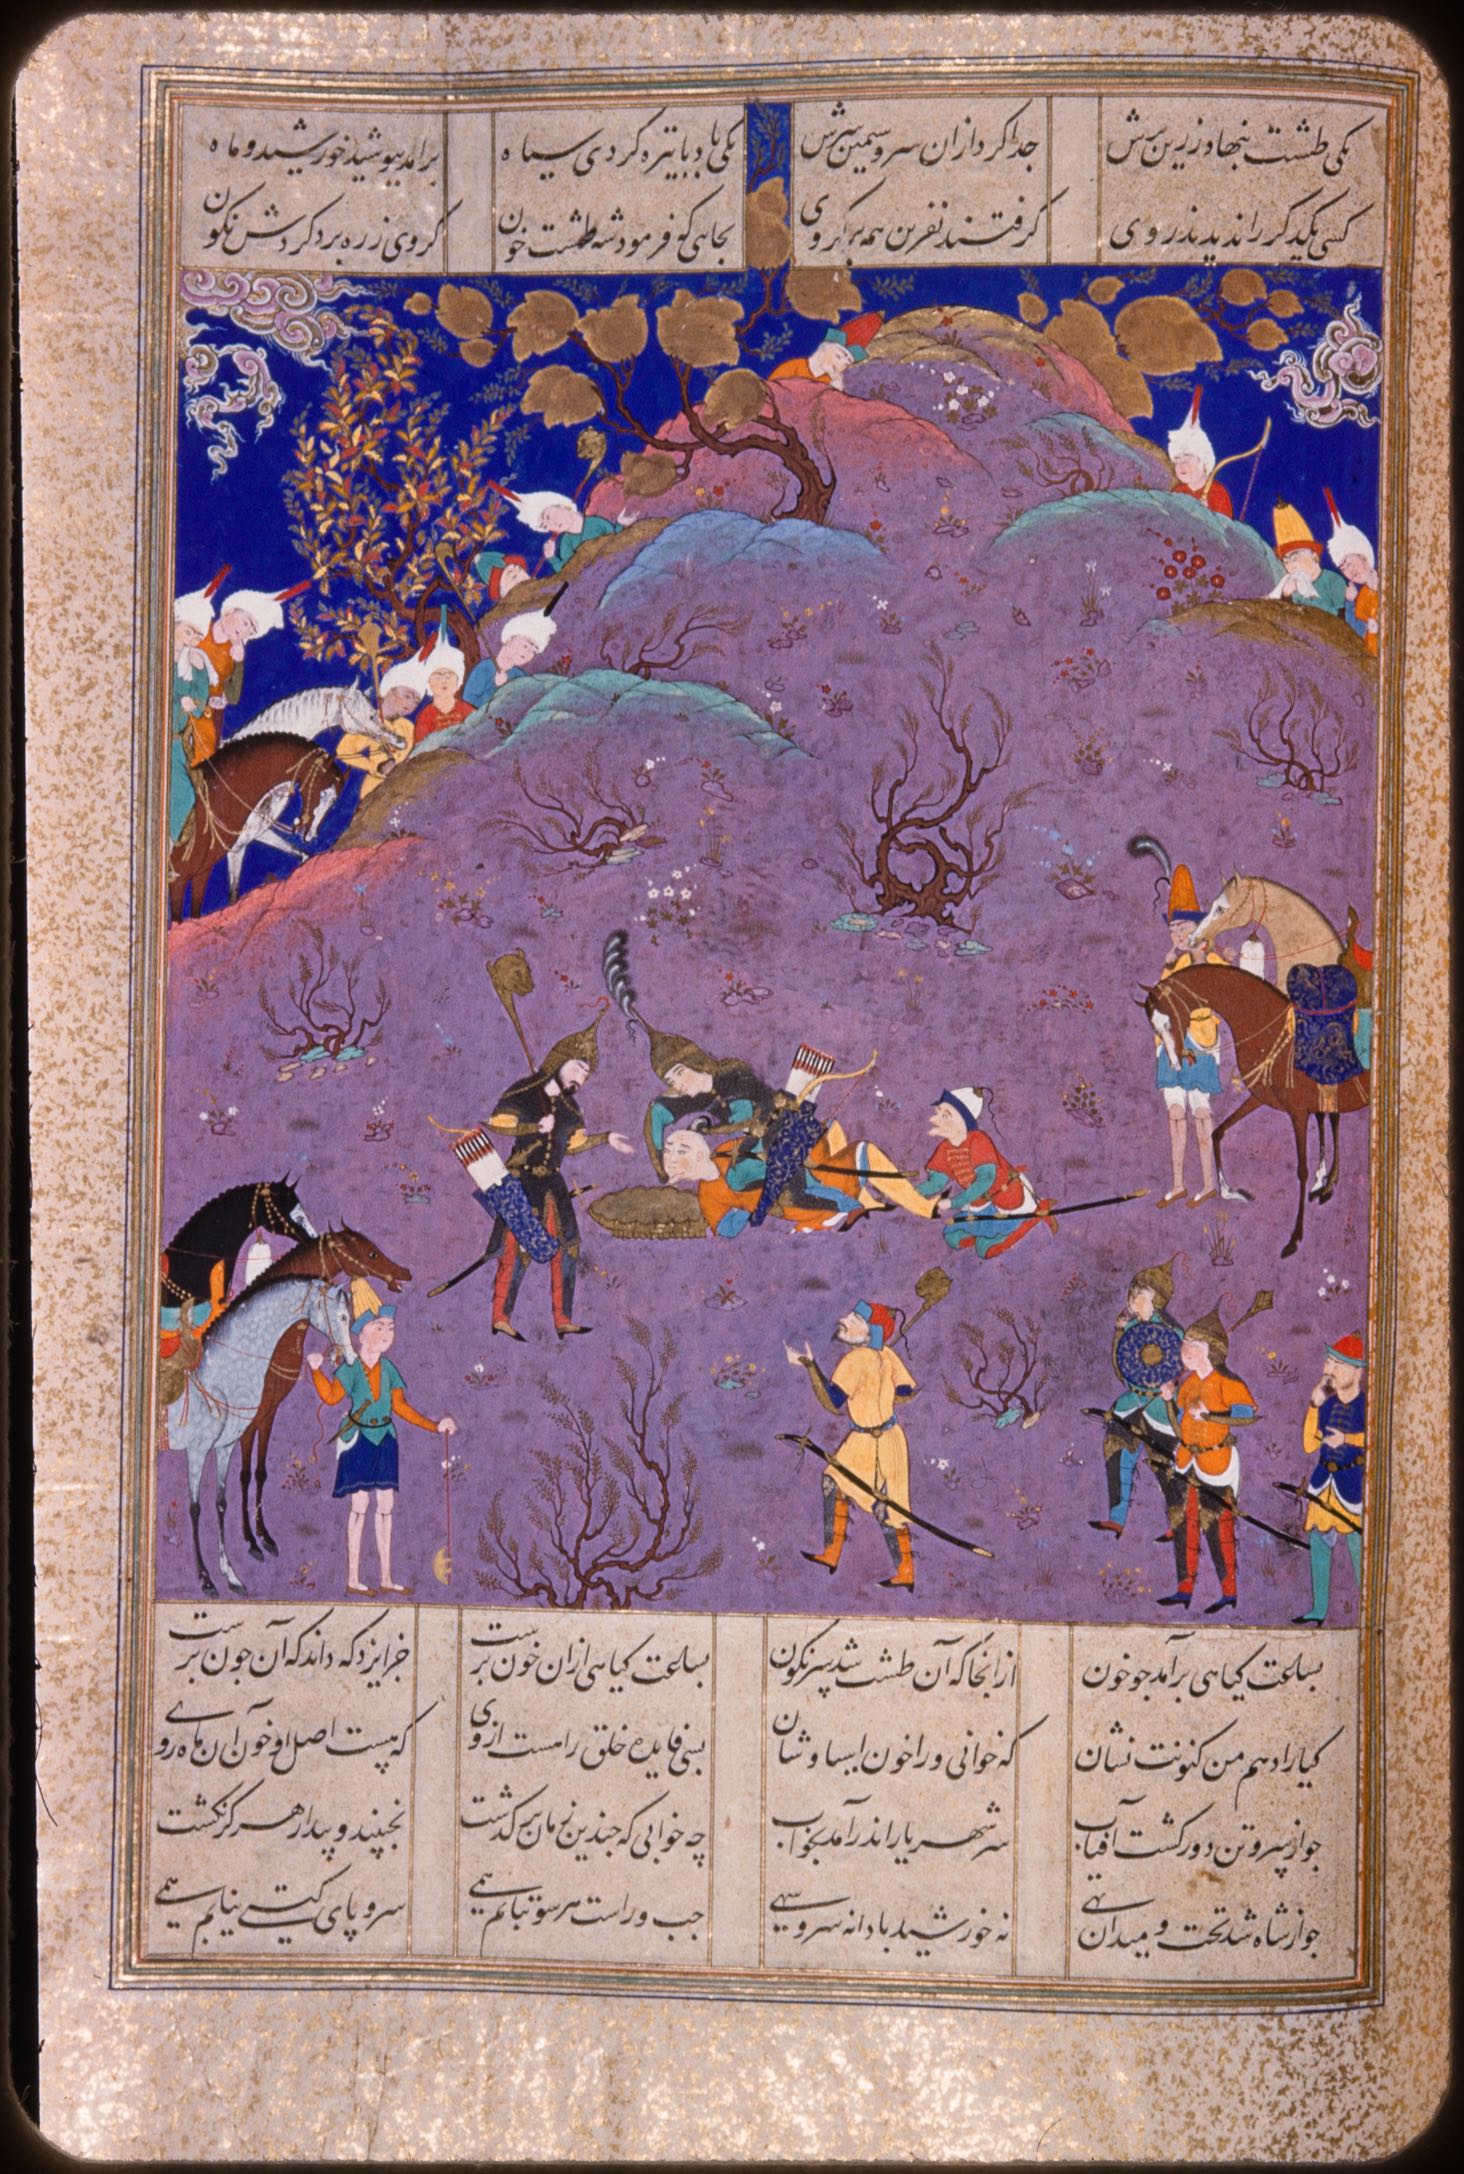 The Murder of Siyavush (Tehran Museum of Contemporary Art), f. 198r from the Houghton Shahnama